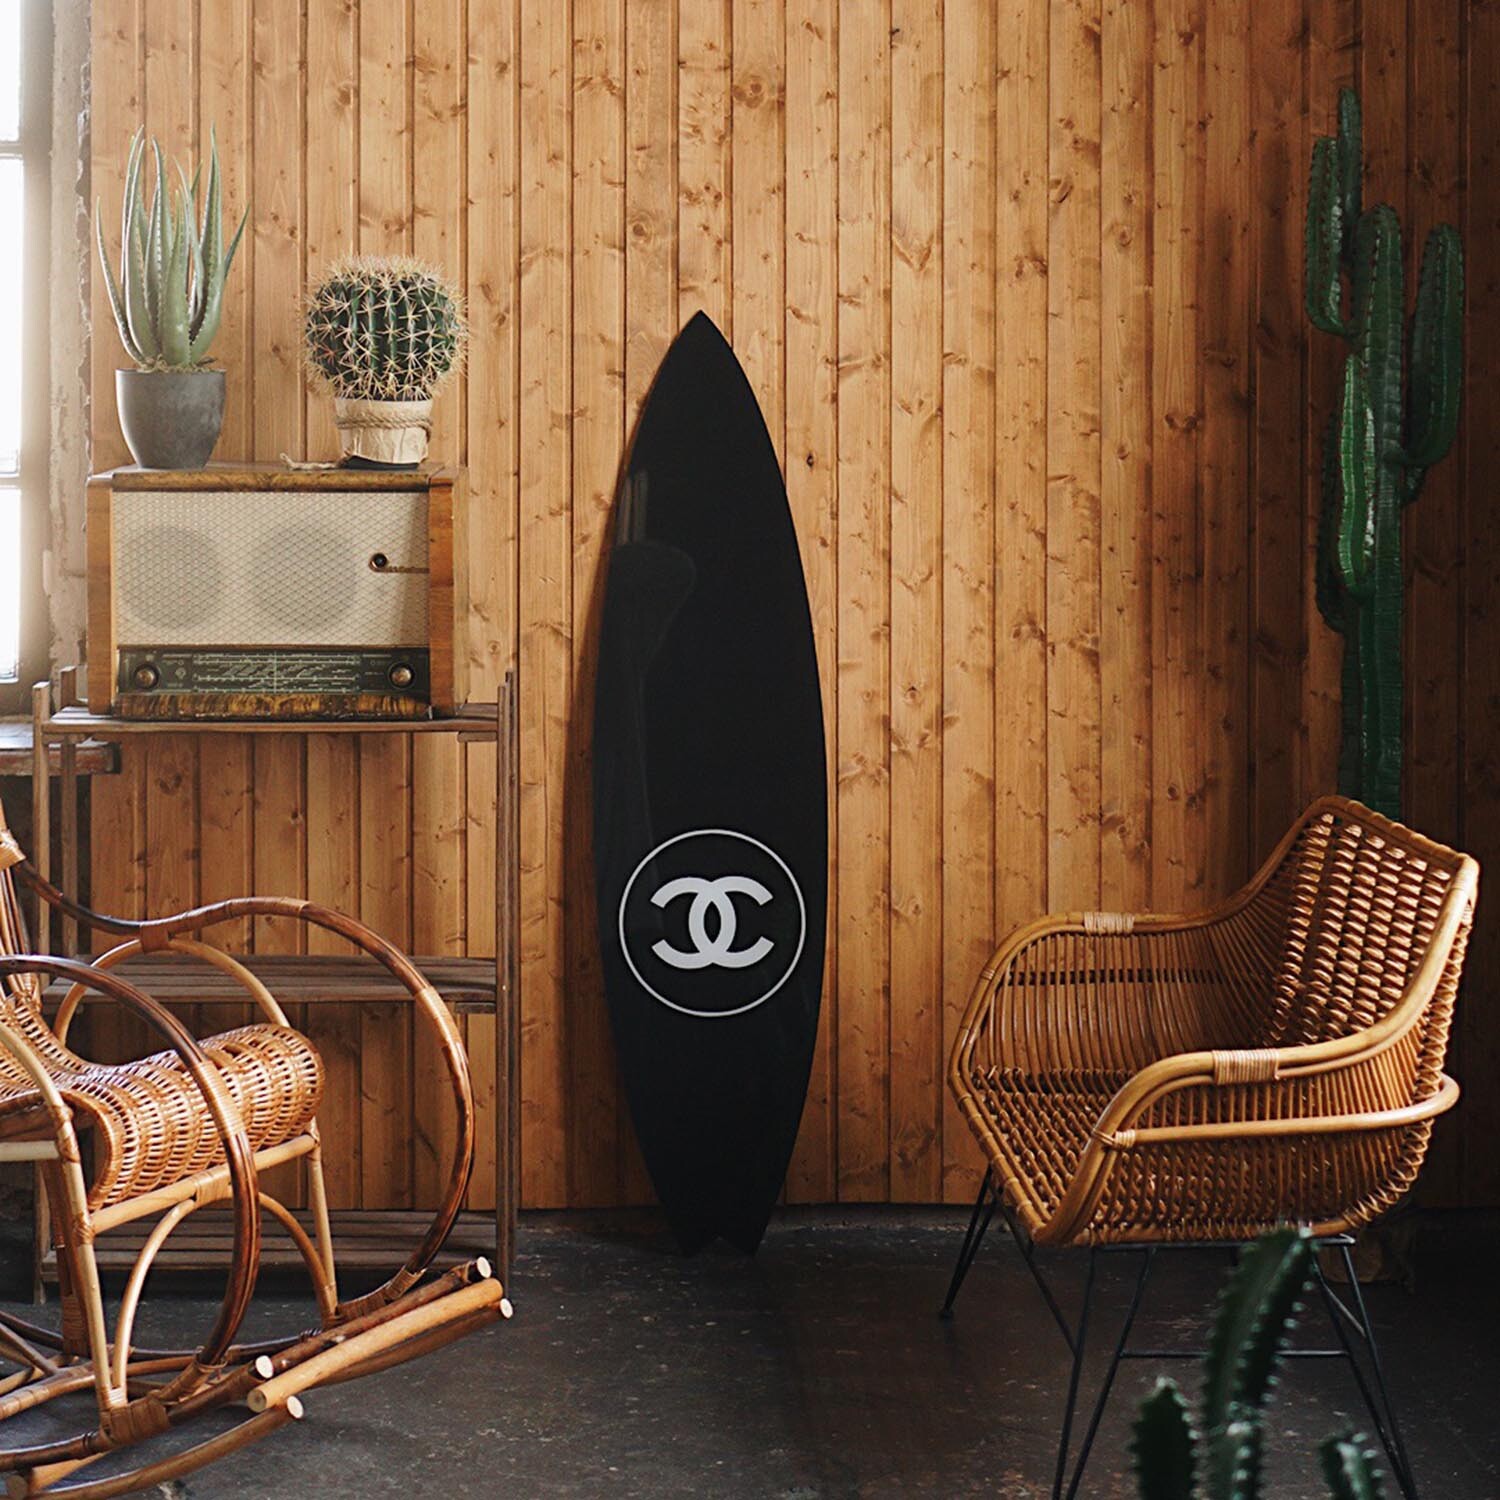 Chanel Surfboard Framed Print – Artformed